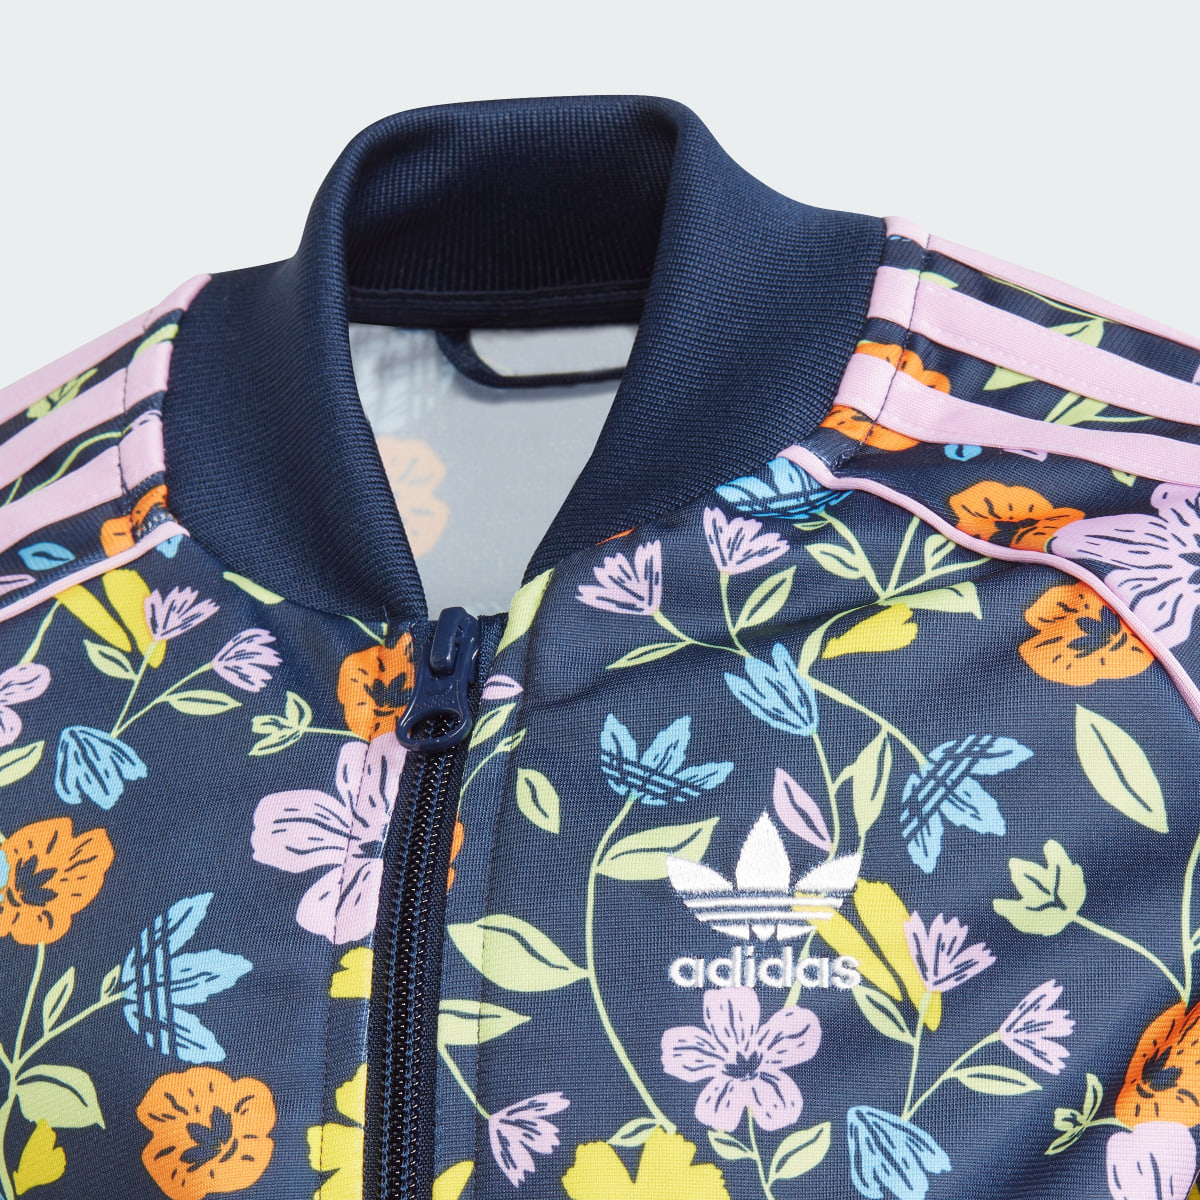 Adidas Floral SST Track Suit. 8